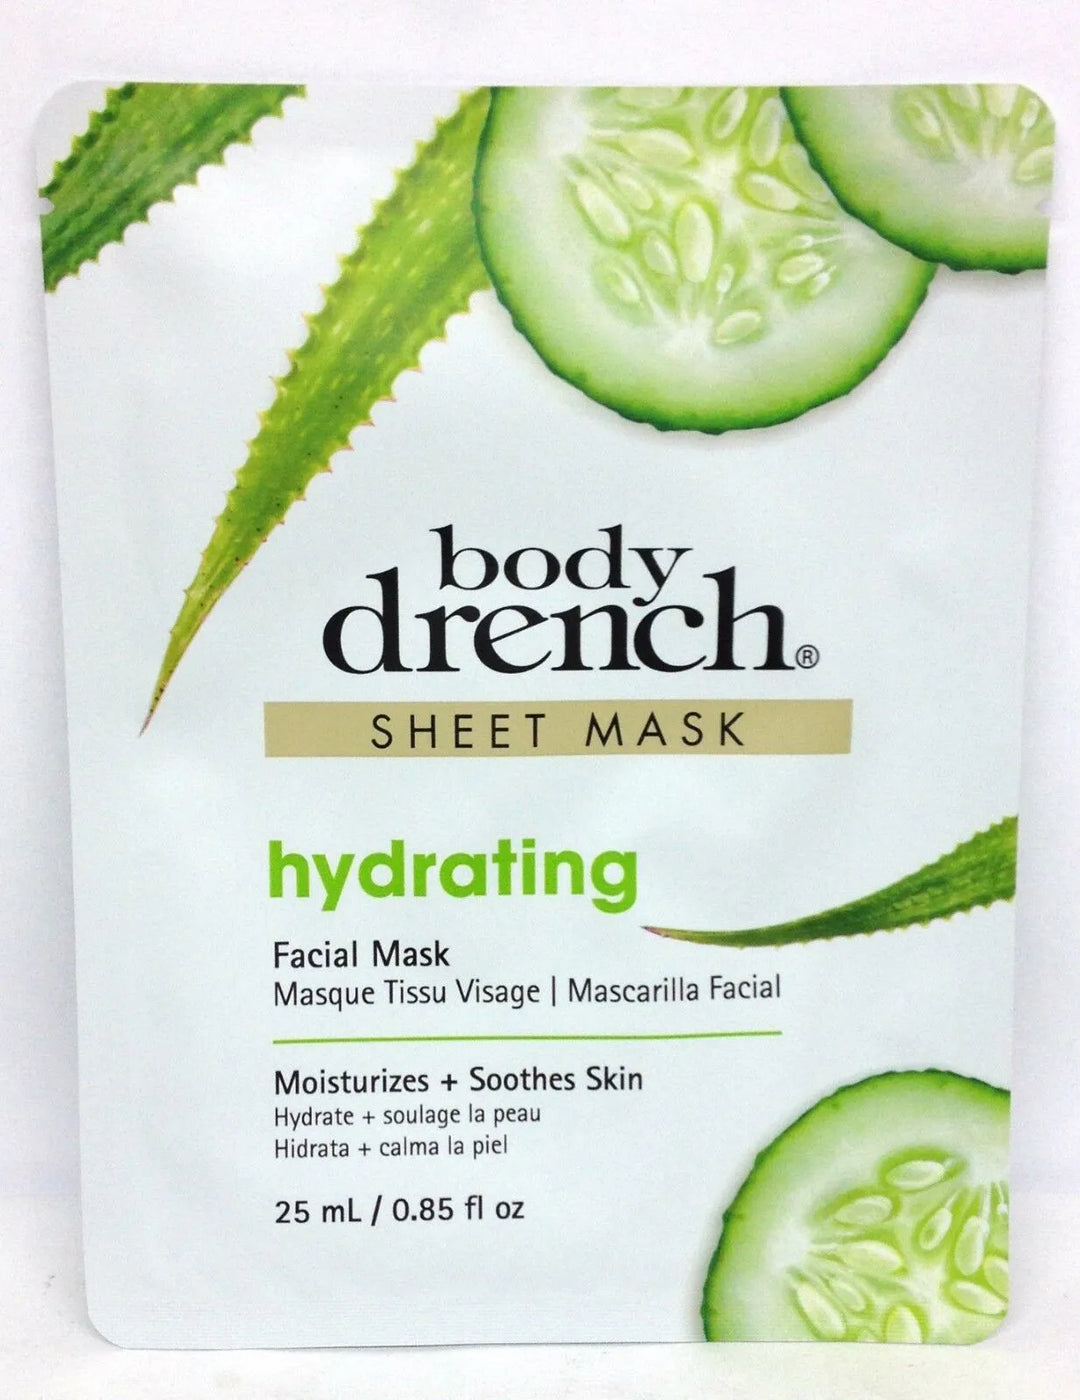 Body Drench Sheet Masks image of hydrating face mask